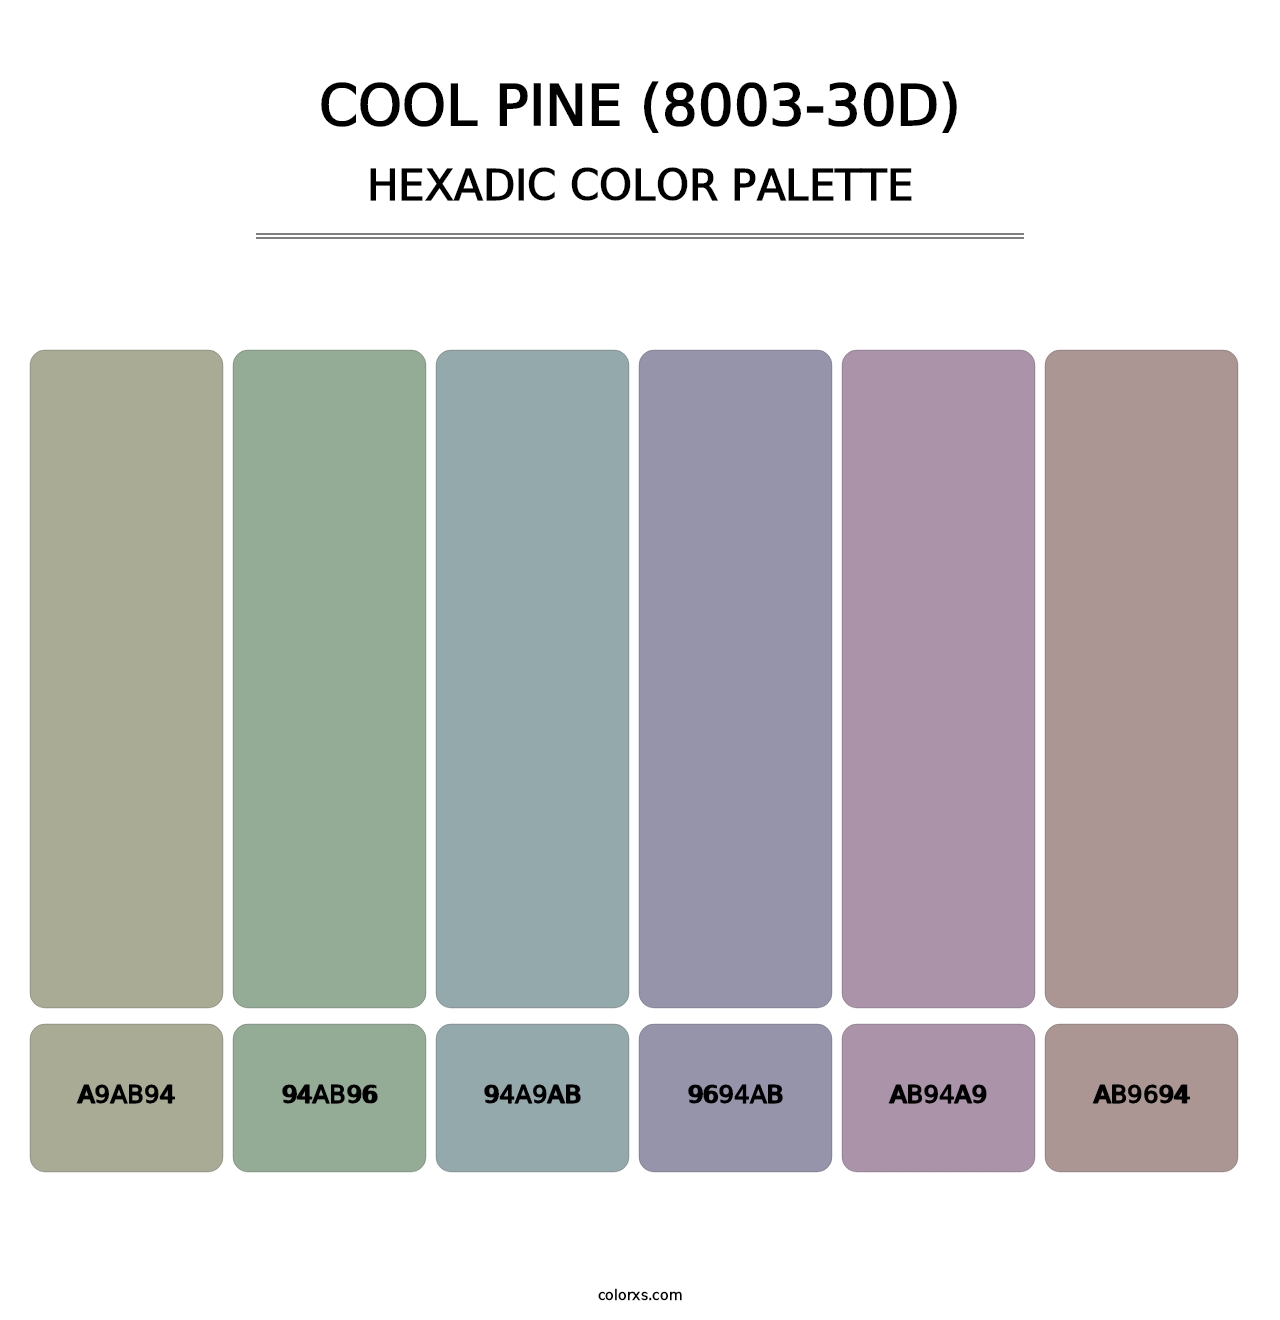 Cool Pine (8003-30D) - Hexadic Color Palette